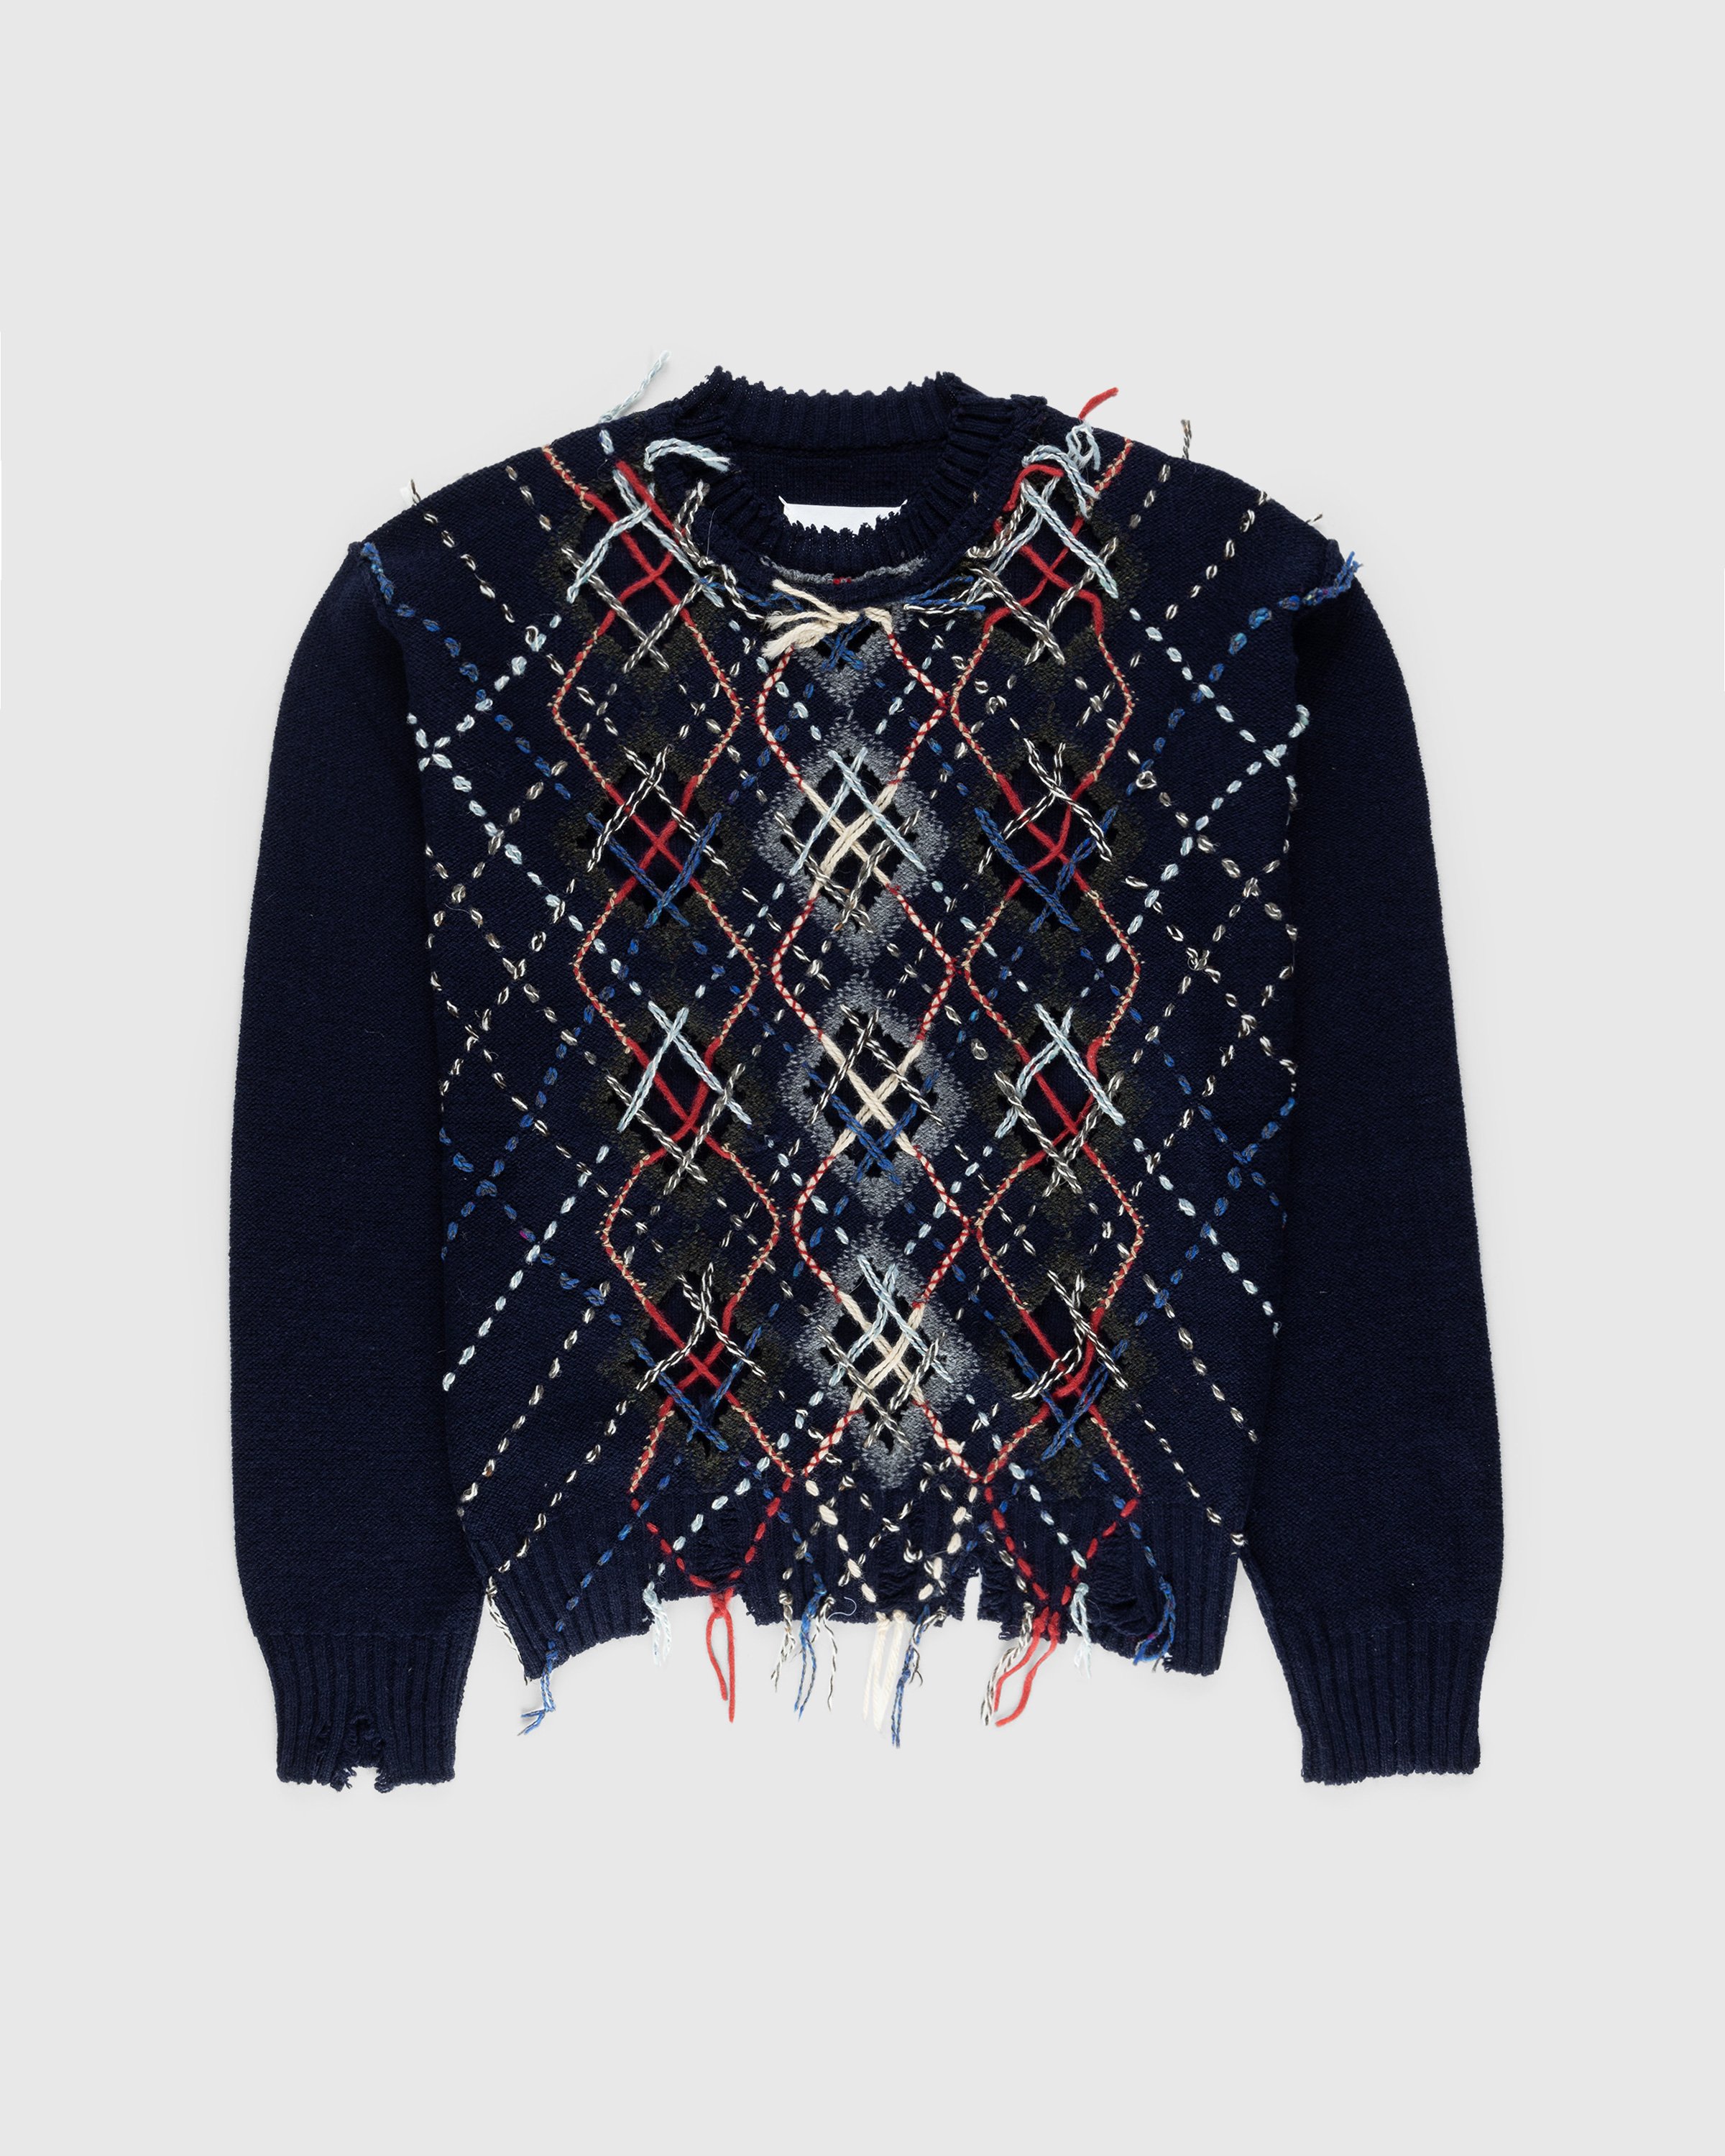 Maison Margiela - Distressed Wool Crewneck Sweater Multi - Clothing - Multi - Image 1